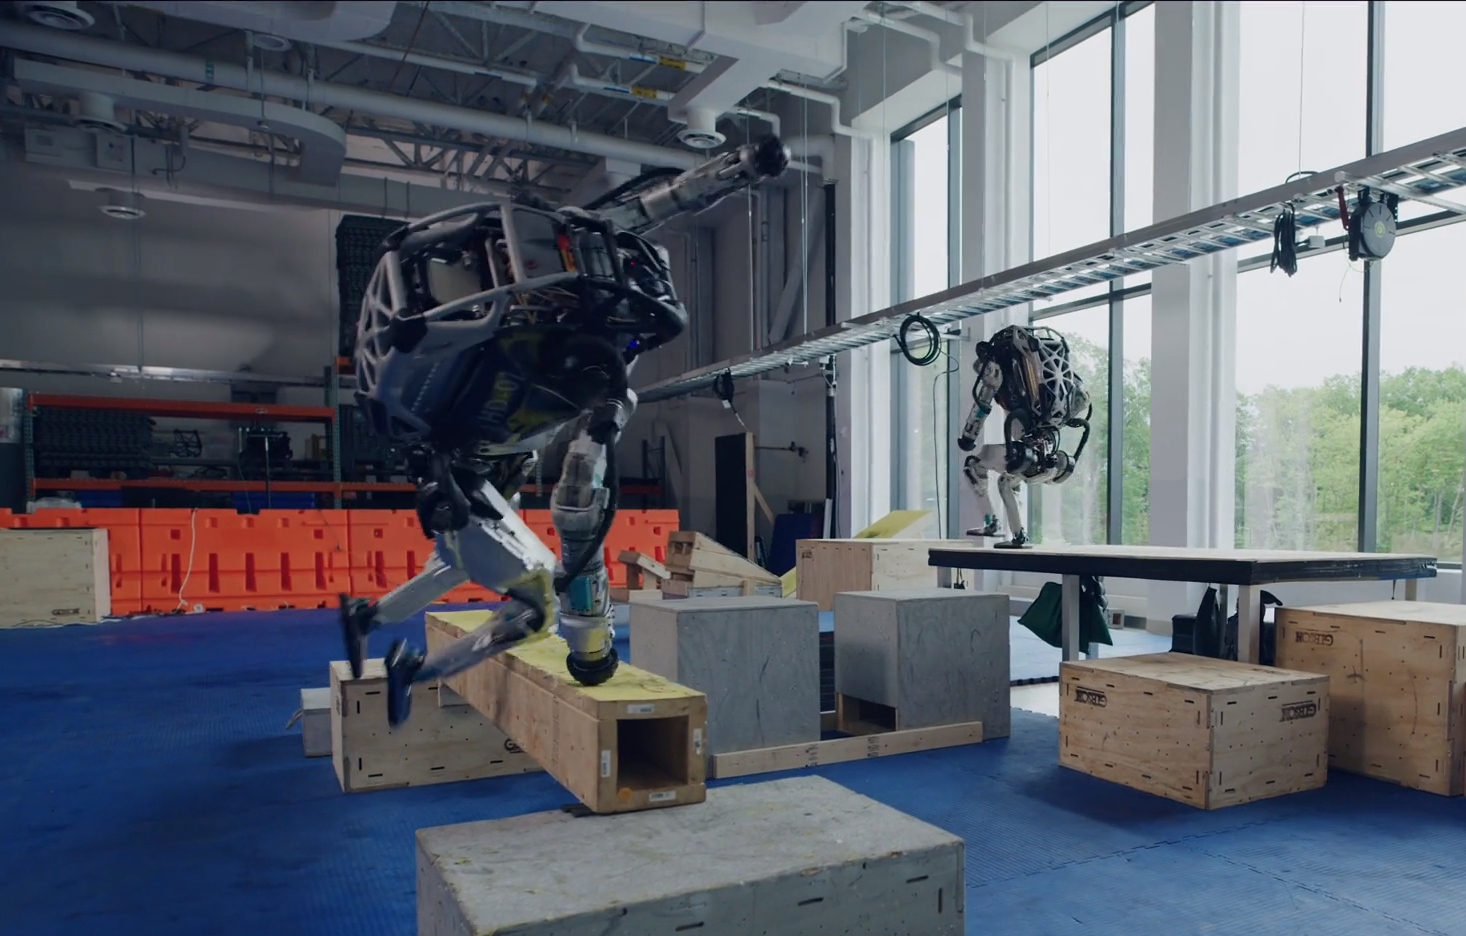 The Atlas Humanoid Robot by Boston Dynamics